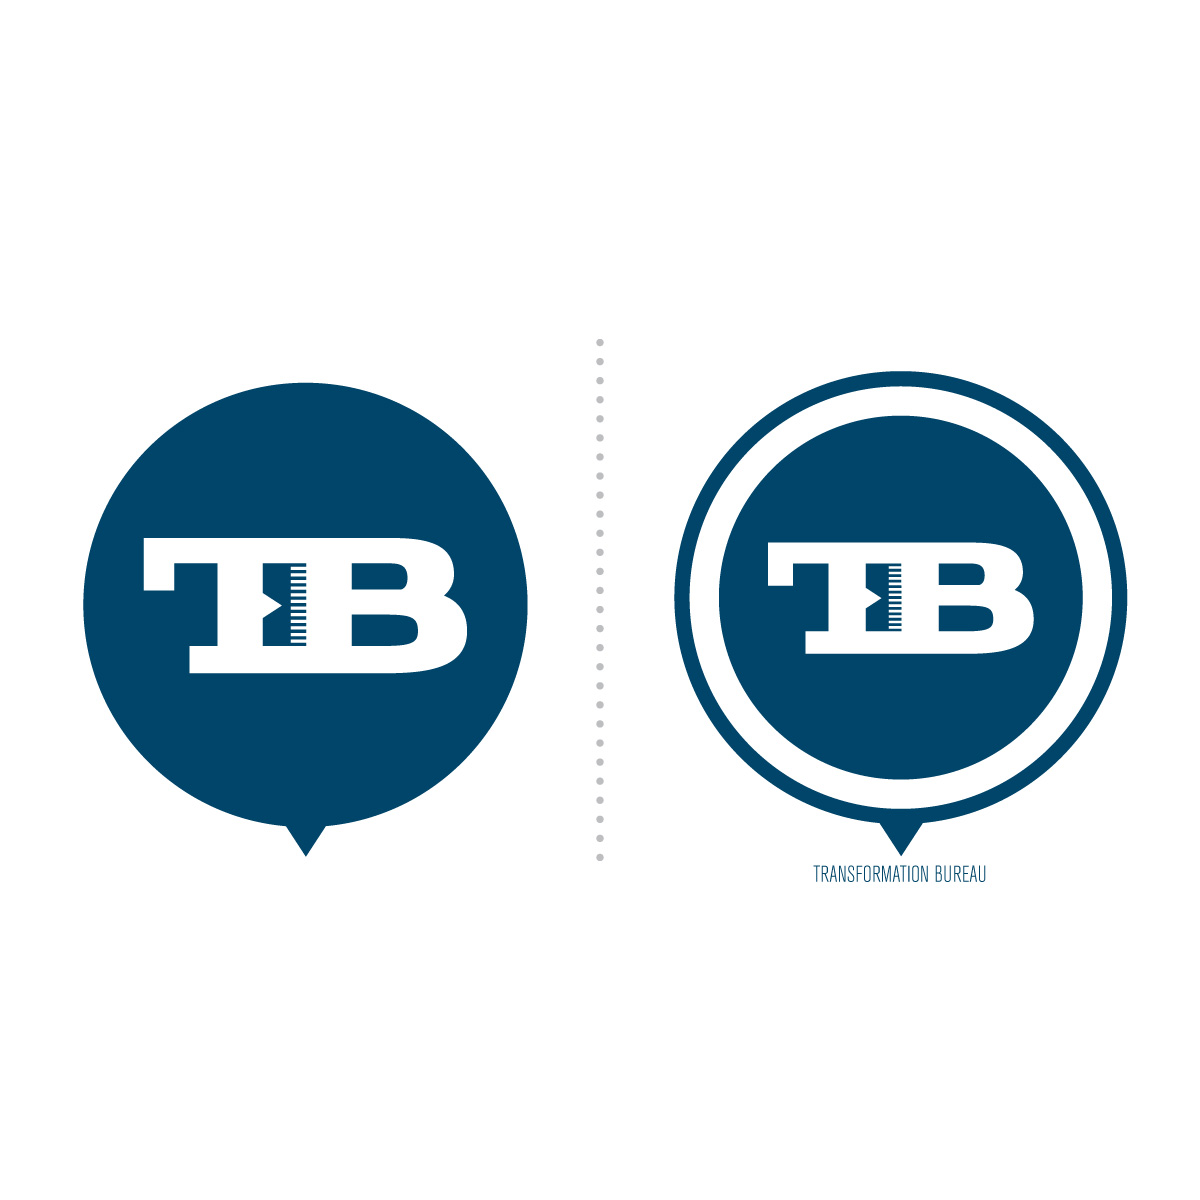 transformation bureau identity icons